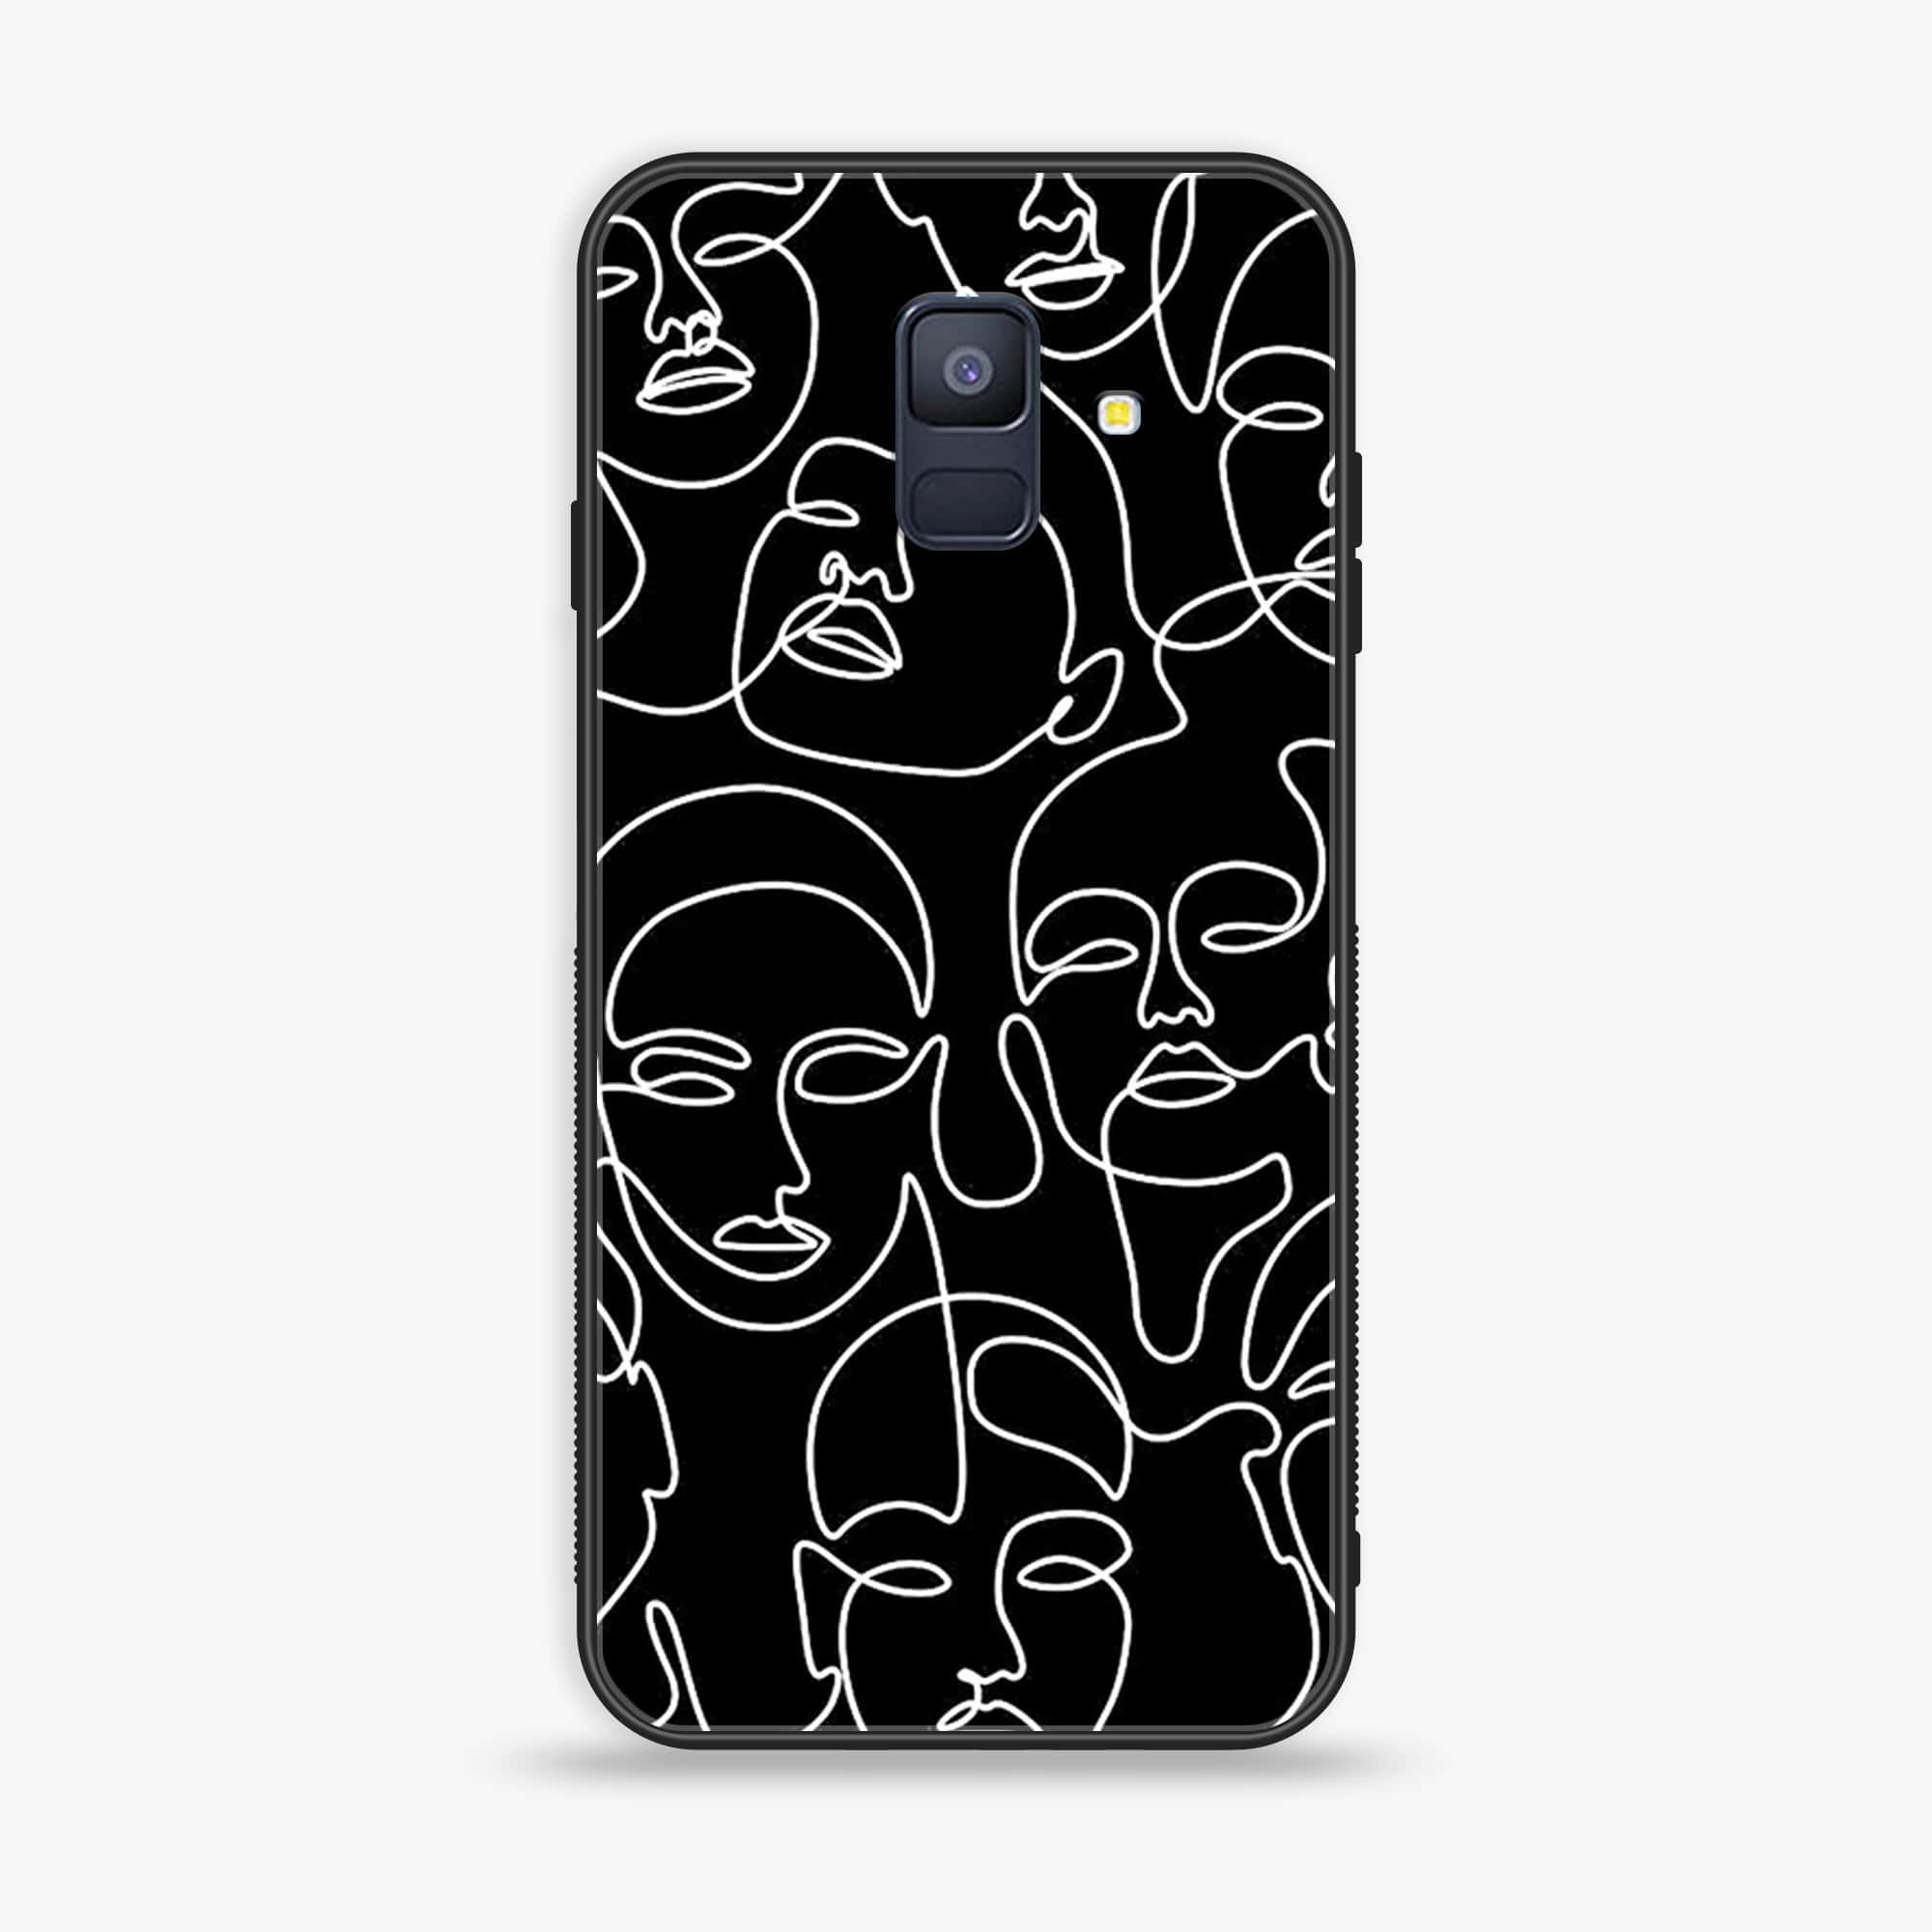 Samsung Galaxy A6 (2018) - Girls Line Art Series - Premium Printed Glass soft Bumper shock Proof Case